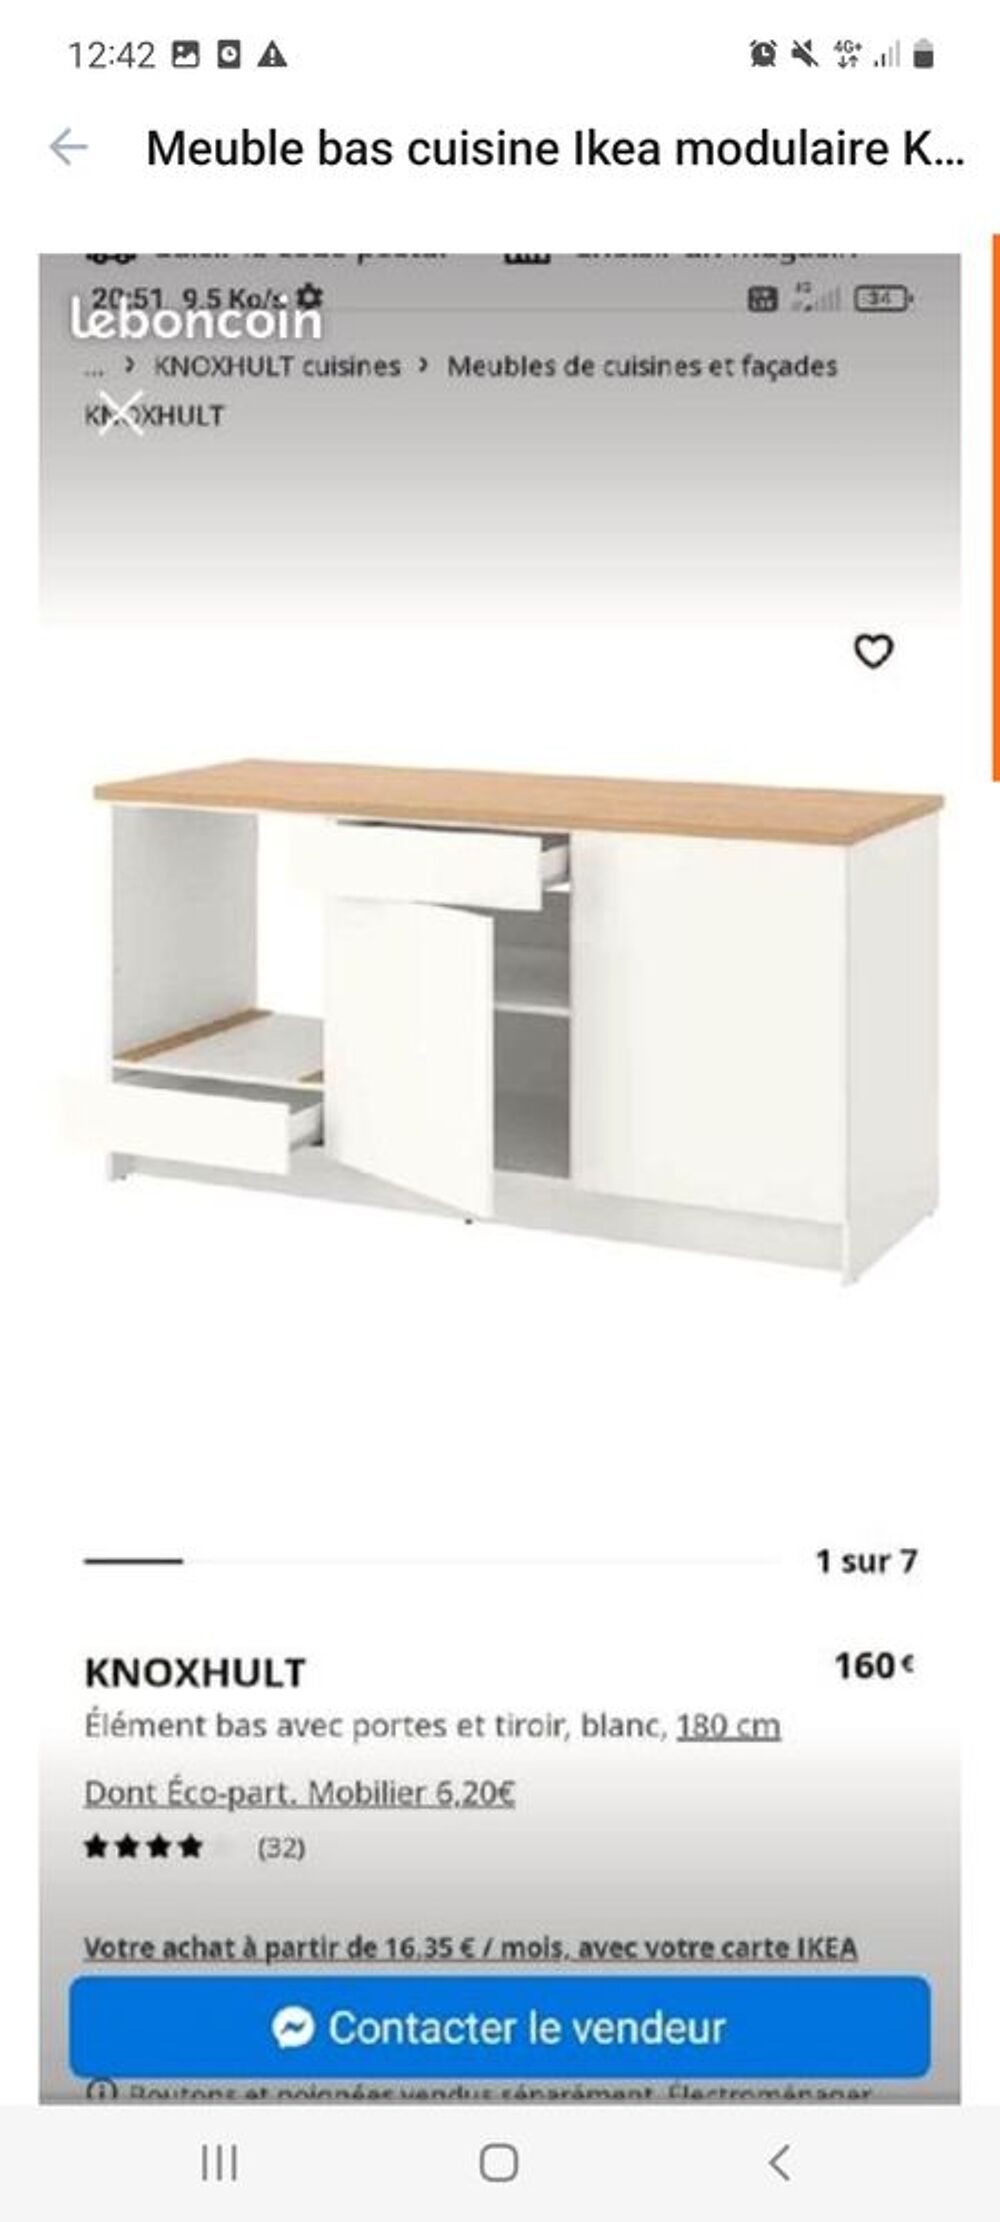 Meuble cuisine Ikea modulaire KNOXHULT 2 placards, 1 tiroir Meubles